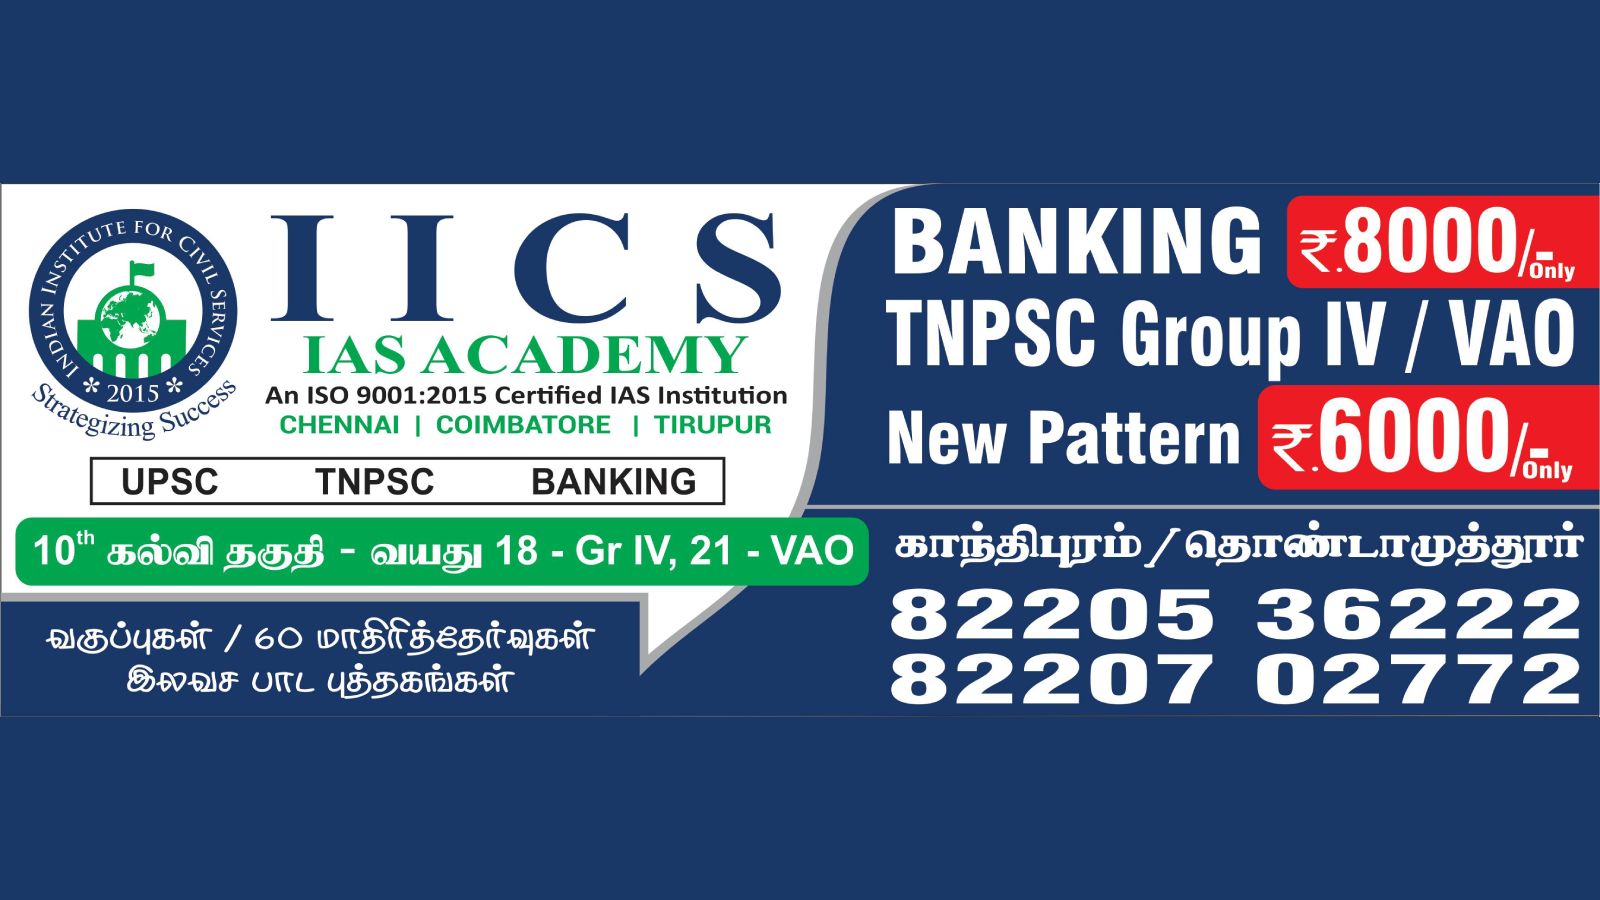 IICS IAS Academy Chennai Hero Slider - 3